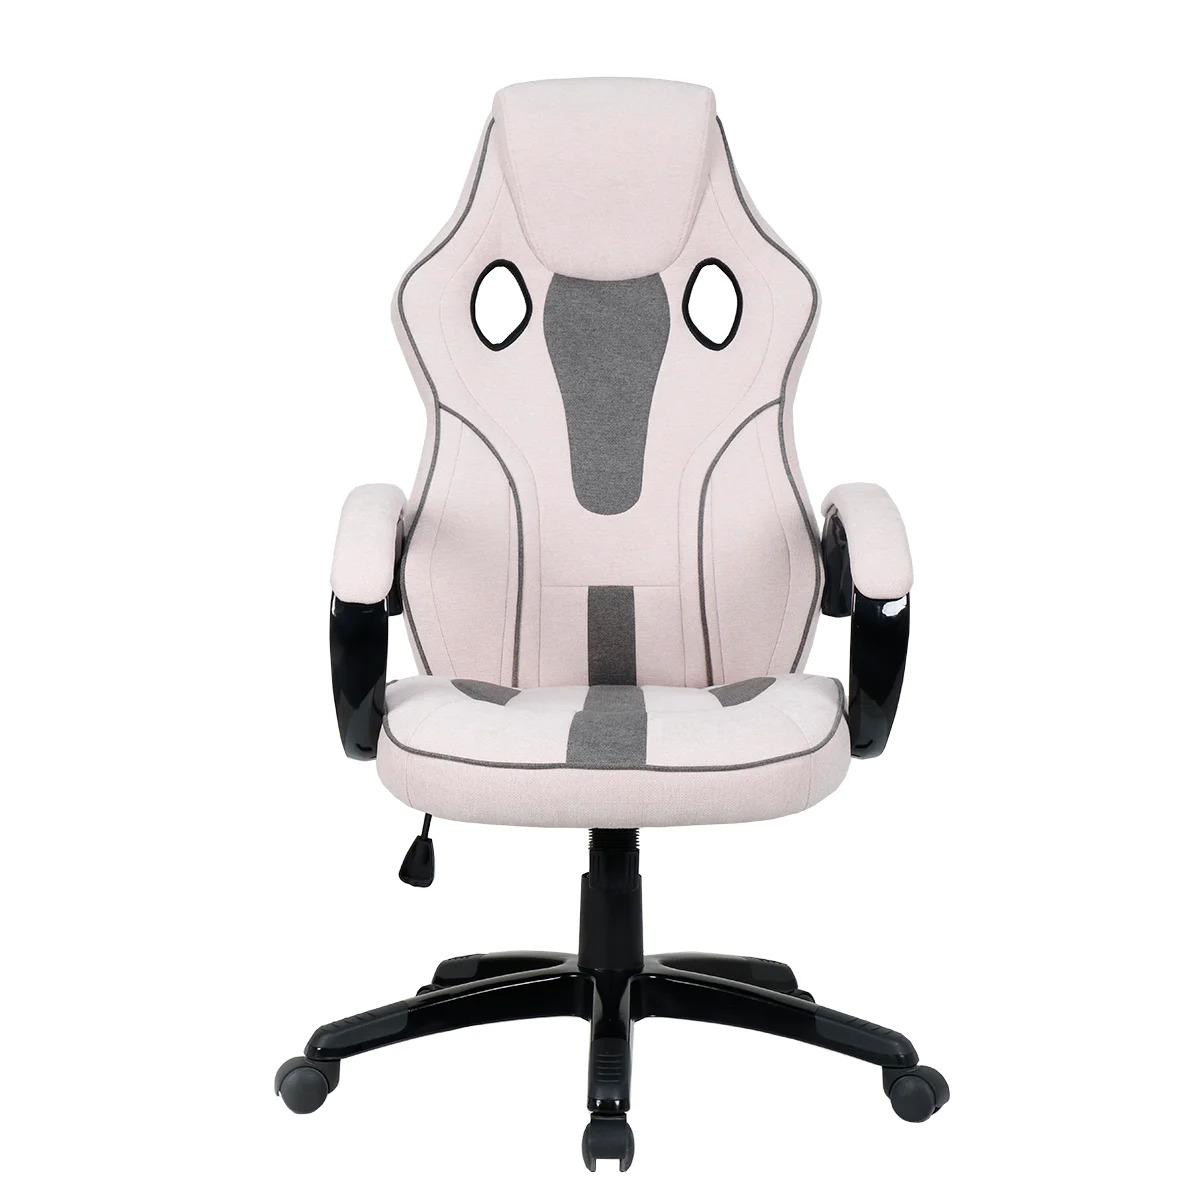 X Rocker Maverick PC Gaming Chair for $69 Shipped